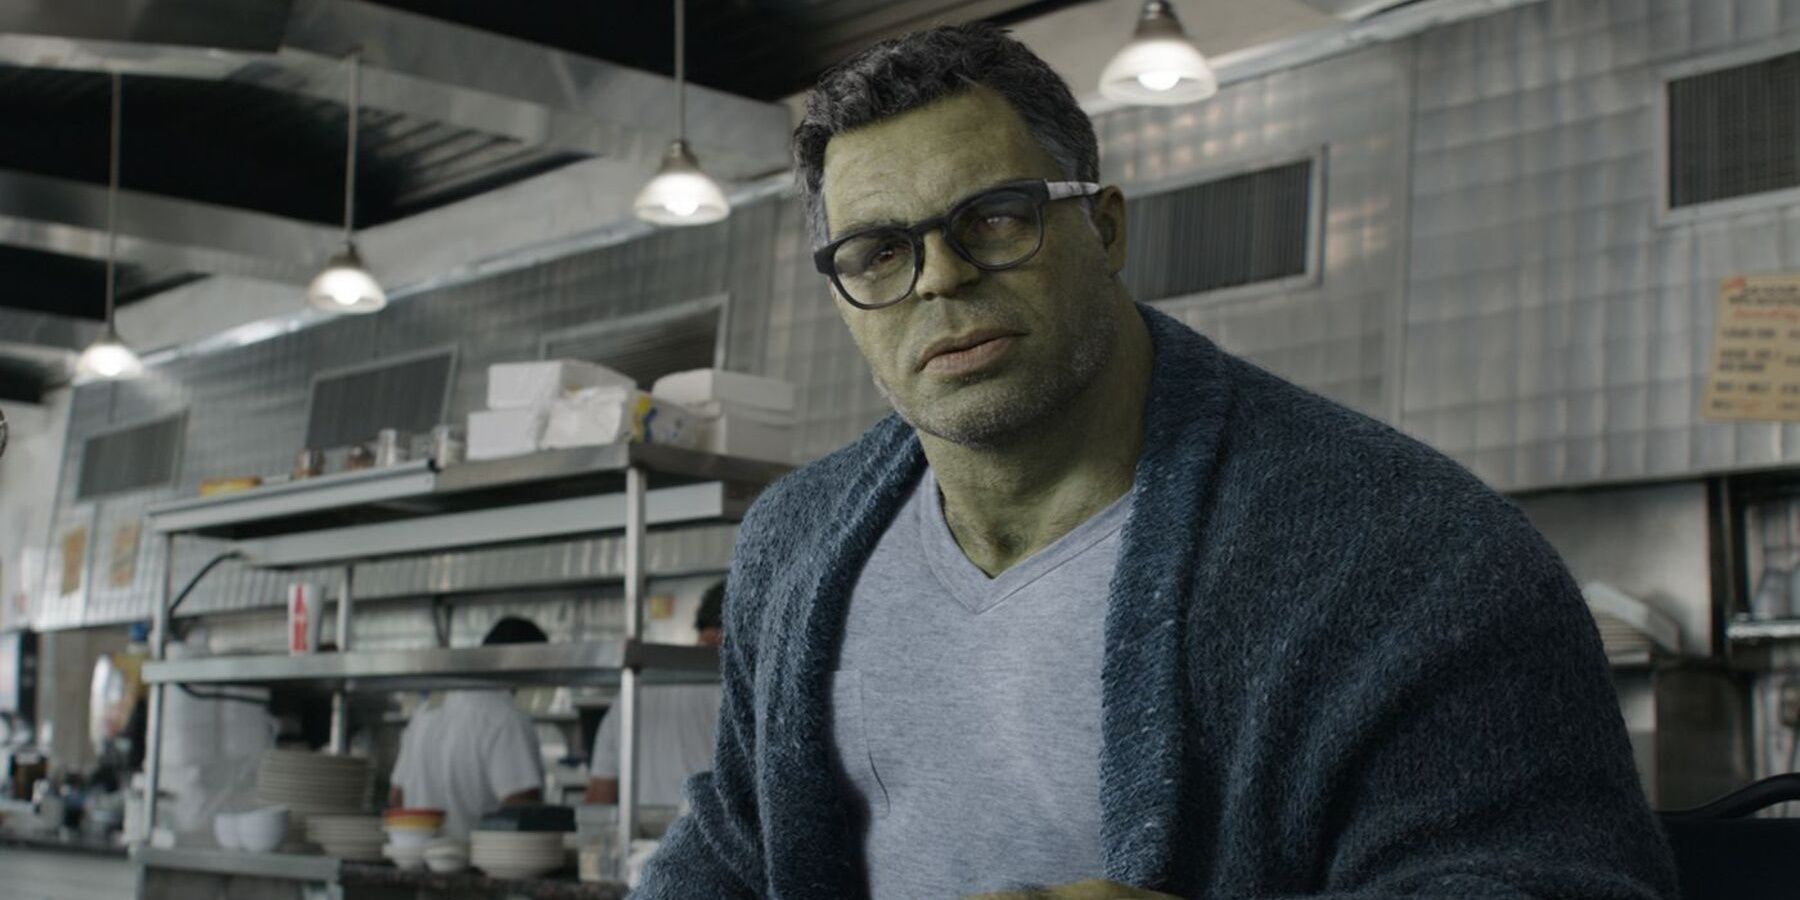 Smart Hulk sitting in a diner